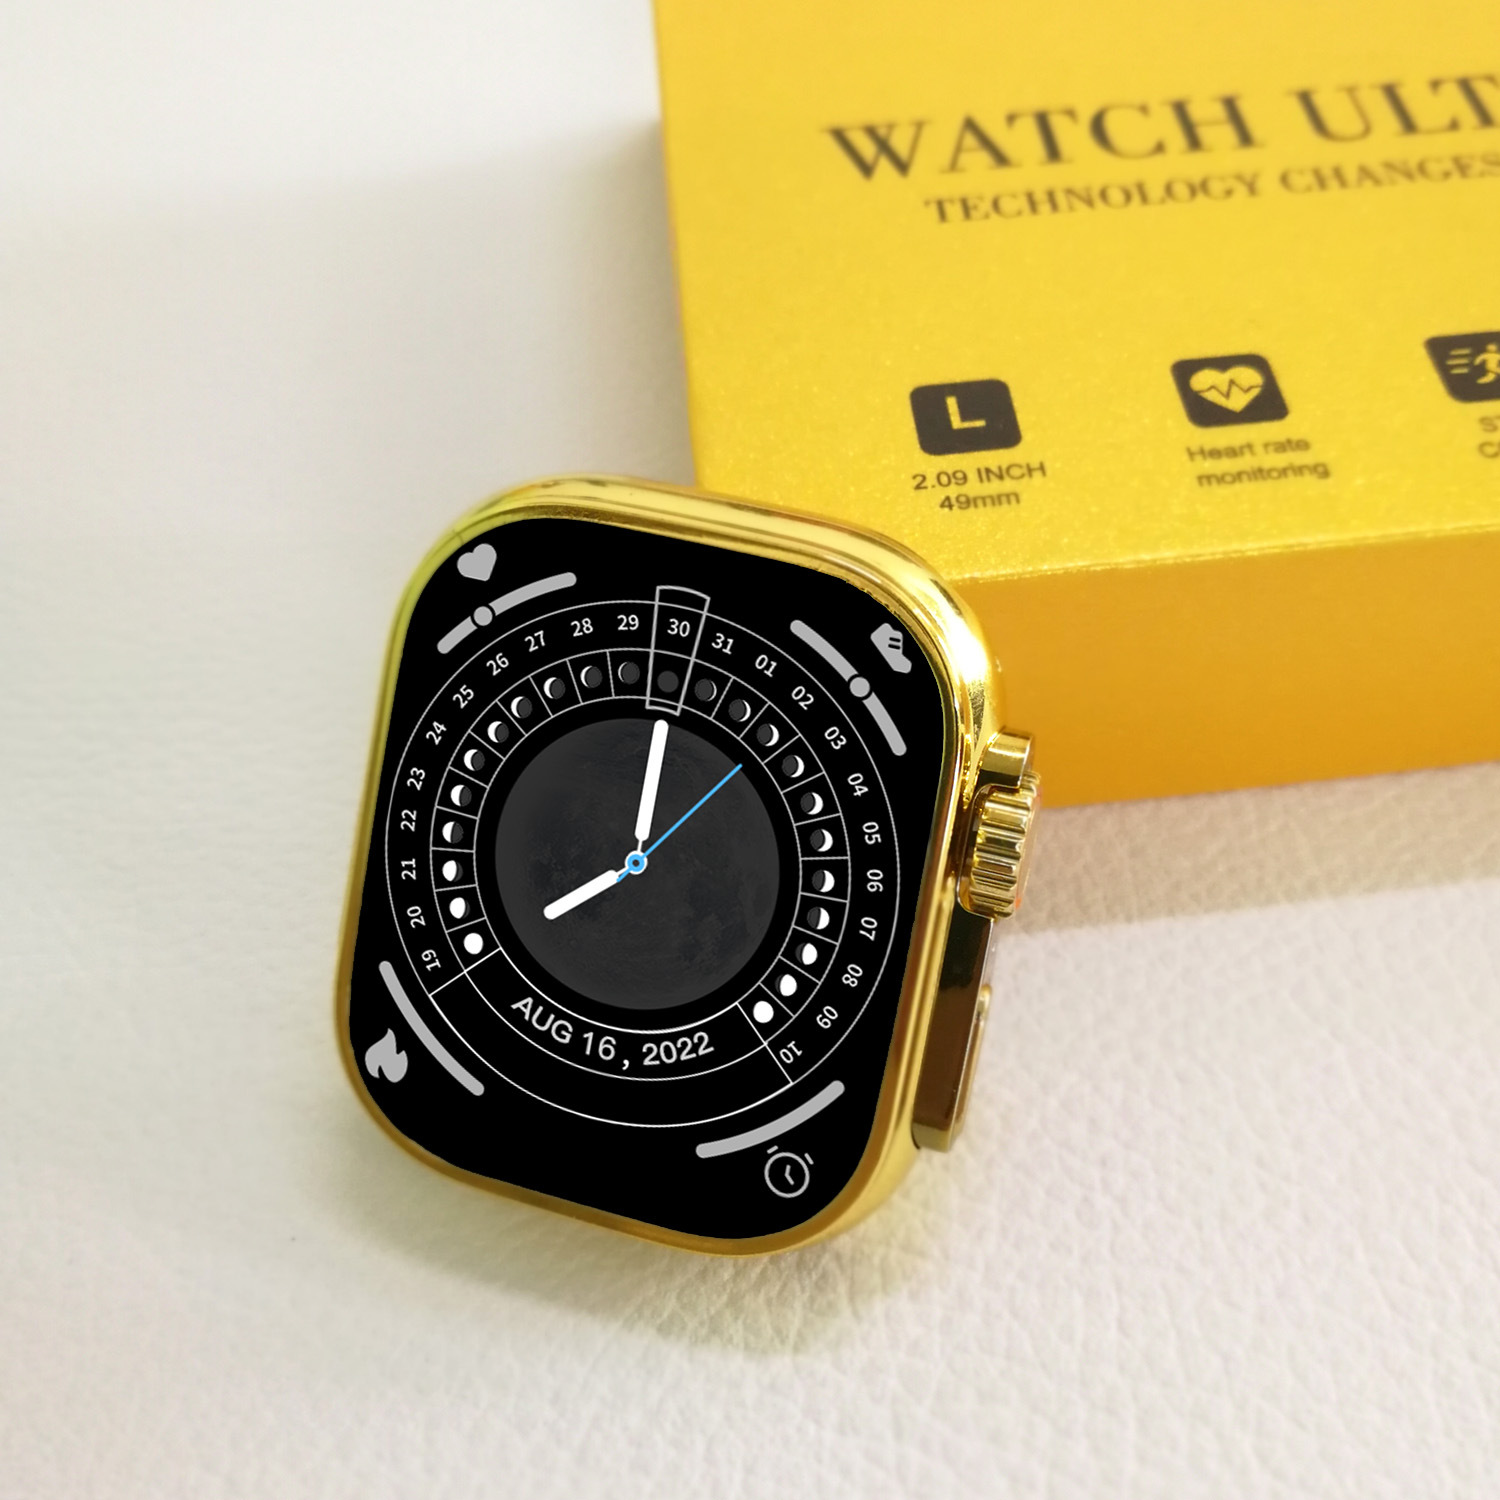 Huaqiang North S8ultra Luxury Smart Watch 2.09-Inch Screen Wireless Bluetooth Call Heart Rate Sports Watch